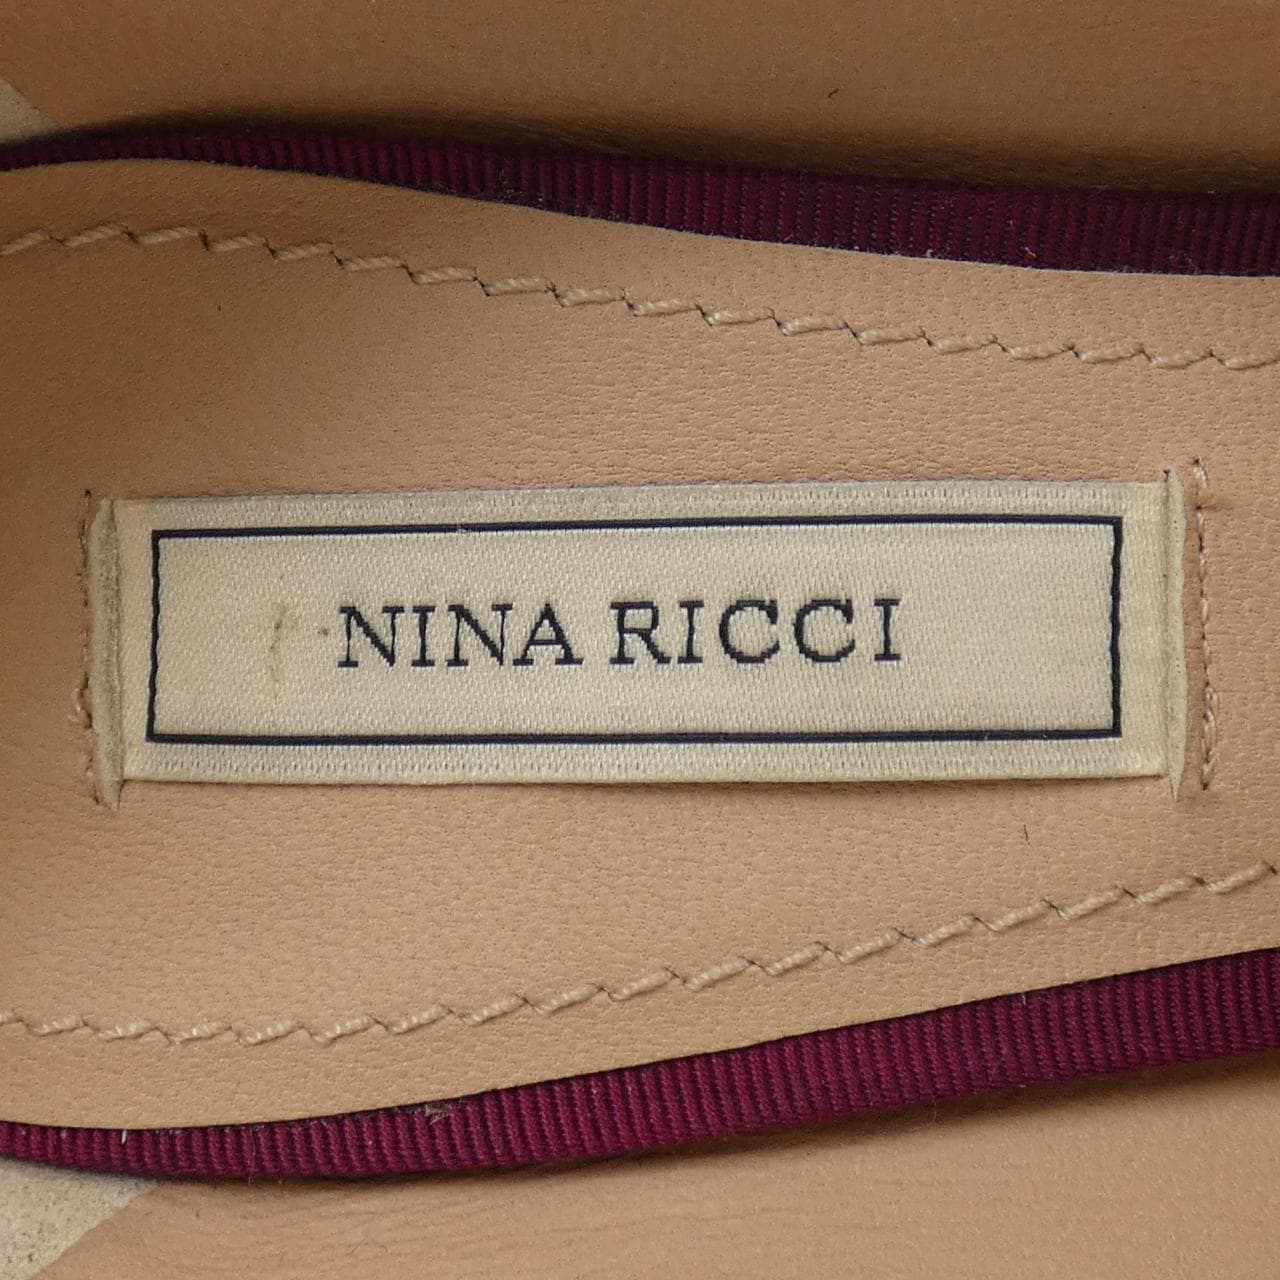 Nina Ricci NINA RICCI pumps